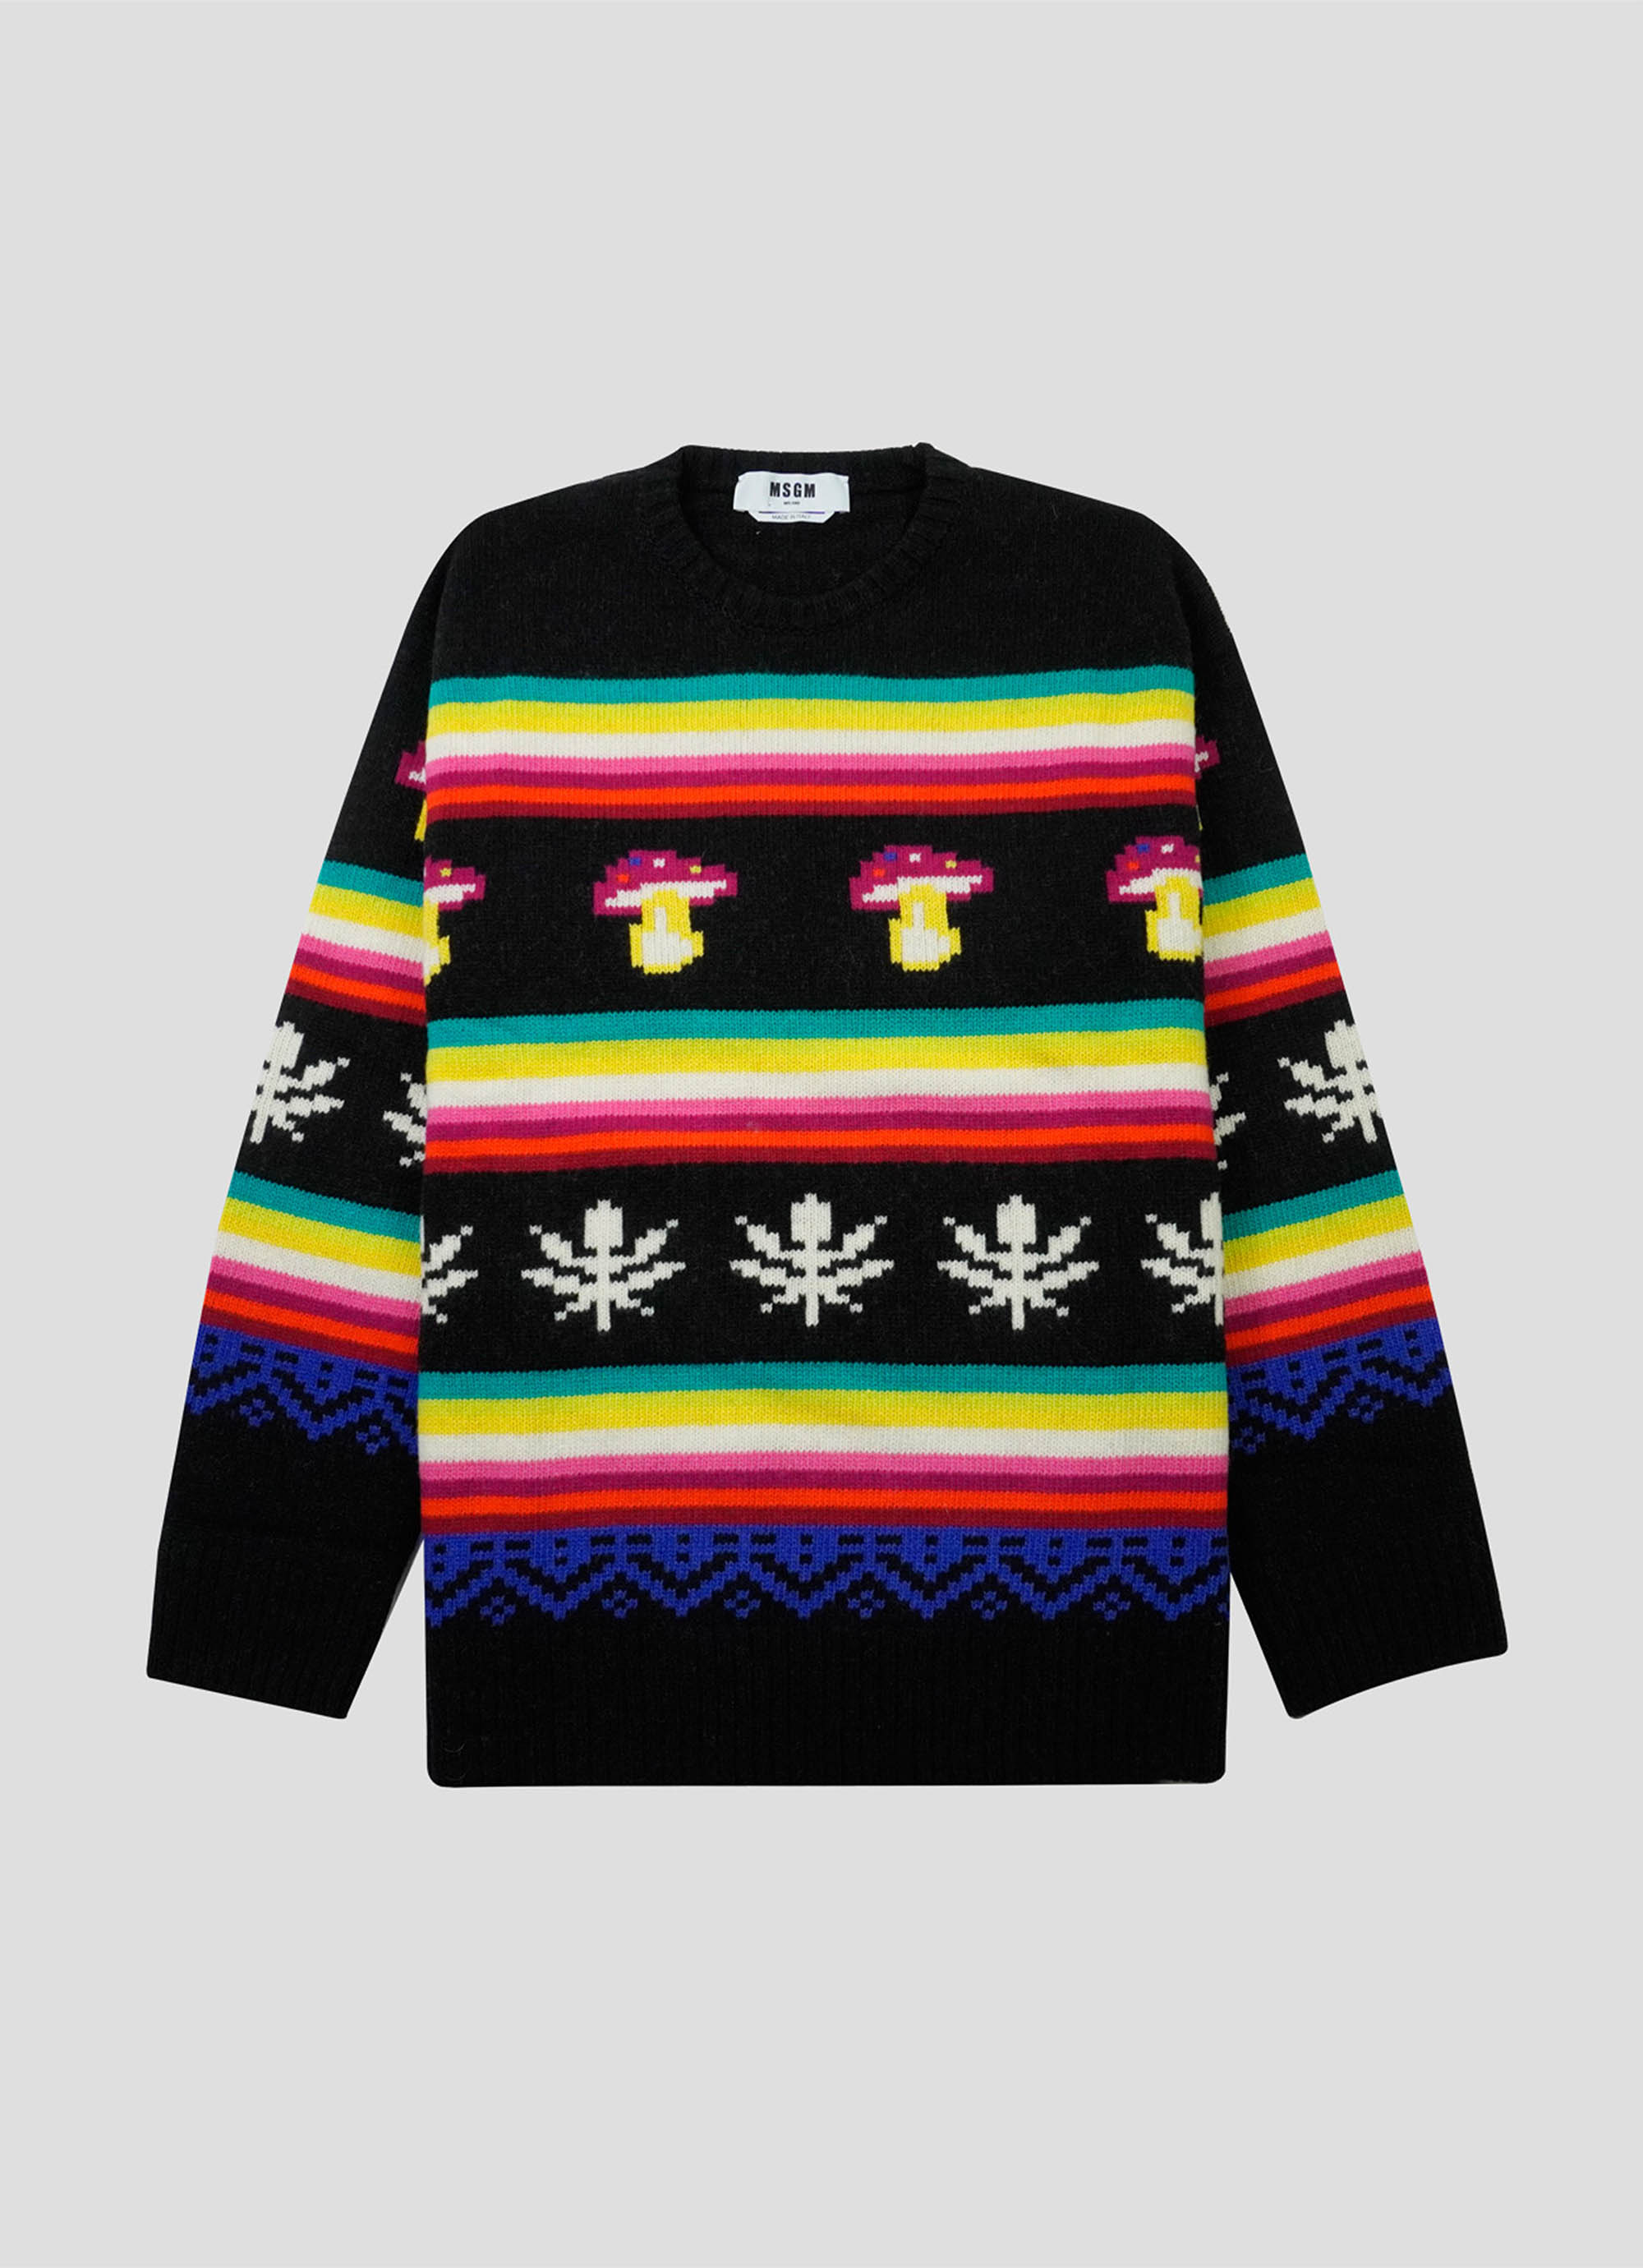 FUNNY MUSHROOM ジャガードセーターの商品画像